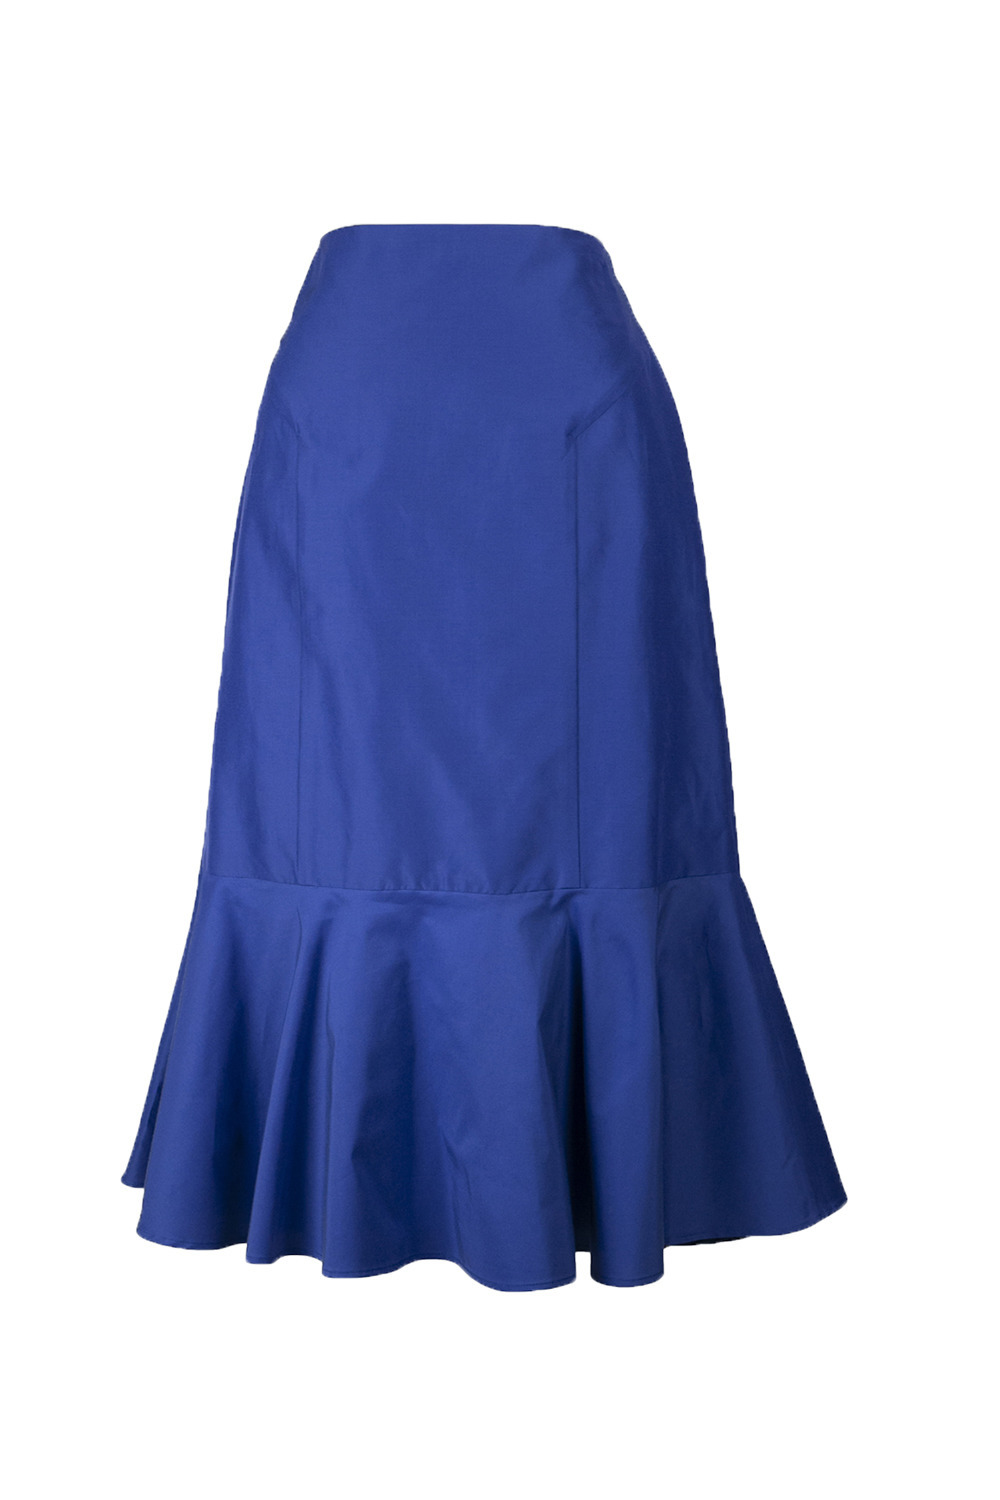 Silk Cotton Color Series スカート 詳細画像 ブルー